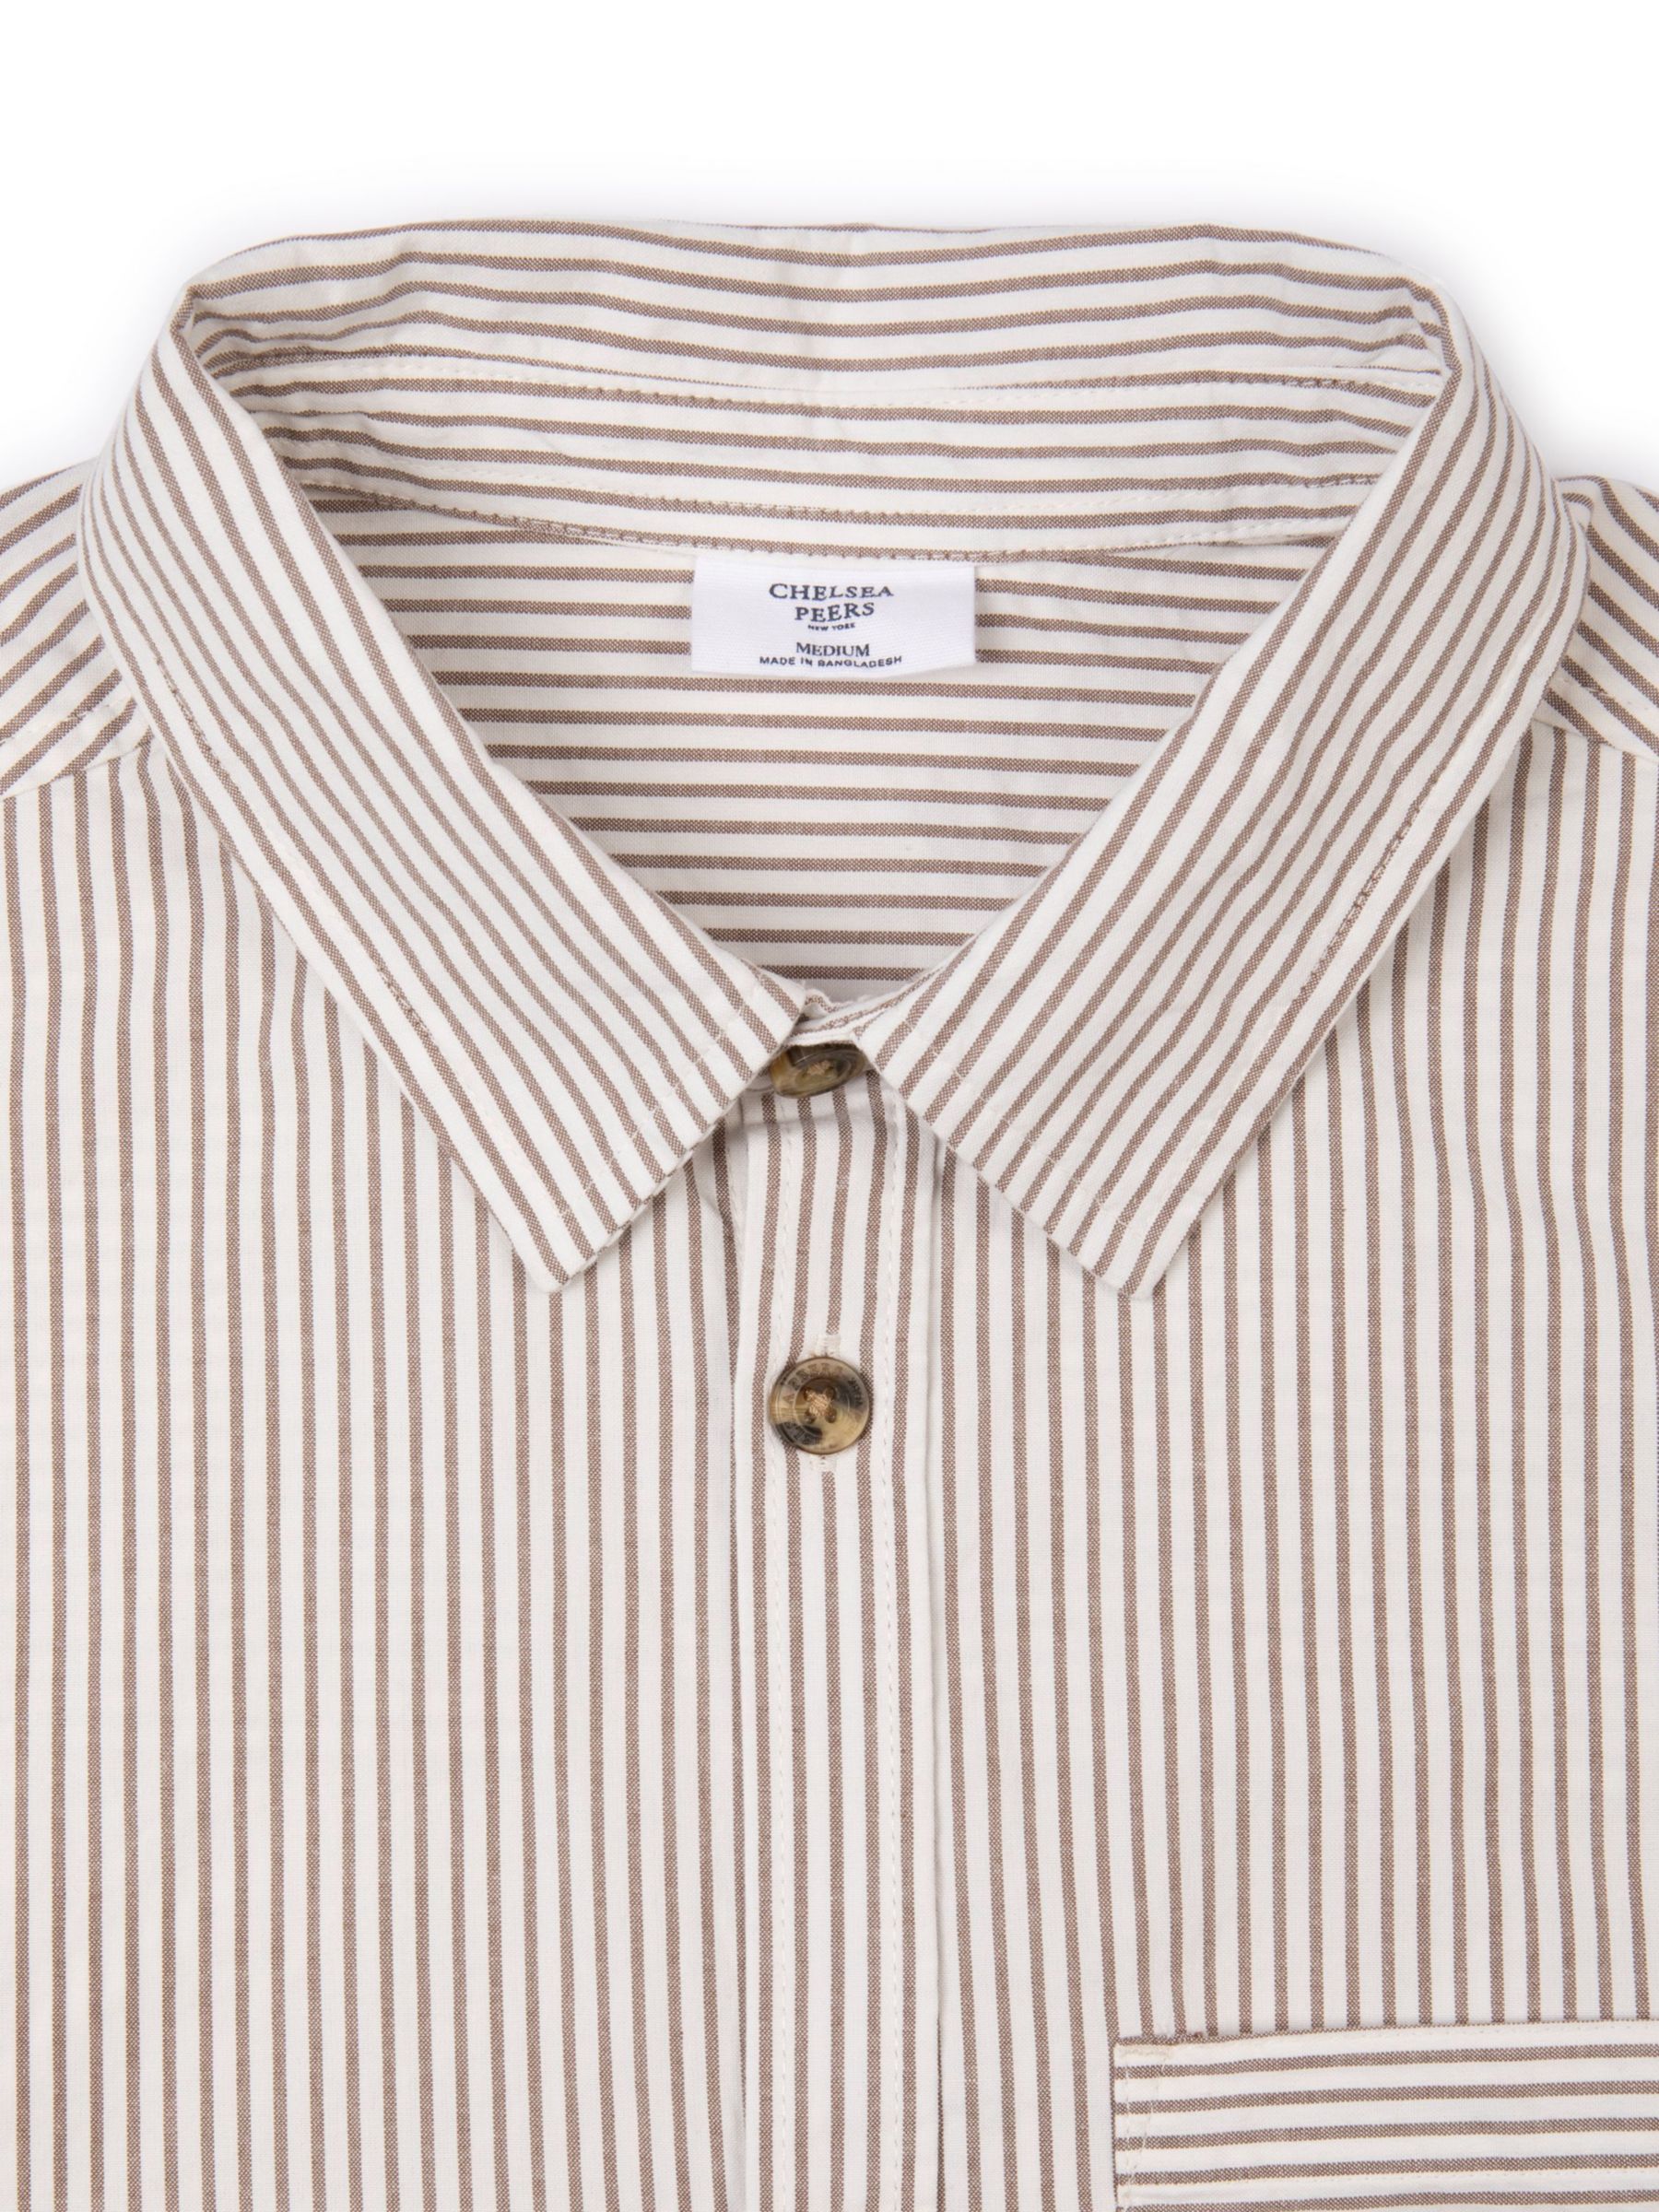 Chelsea Peers Cotton Stripe Shirt, Beige, L